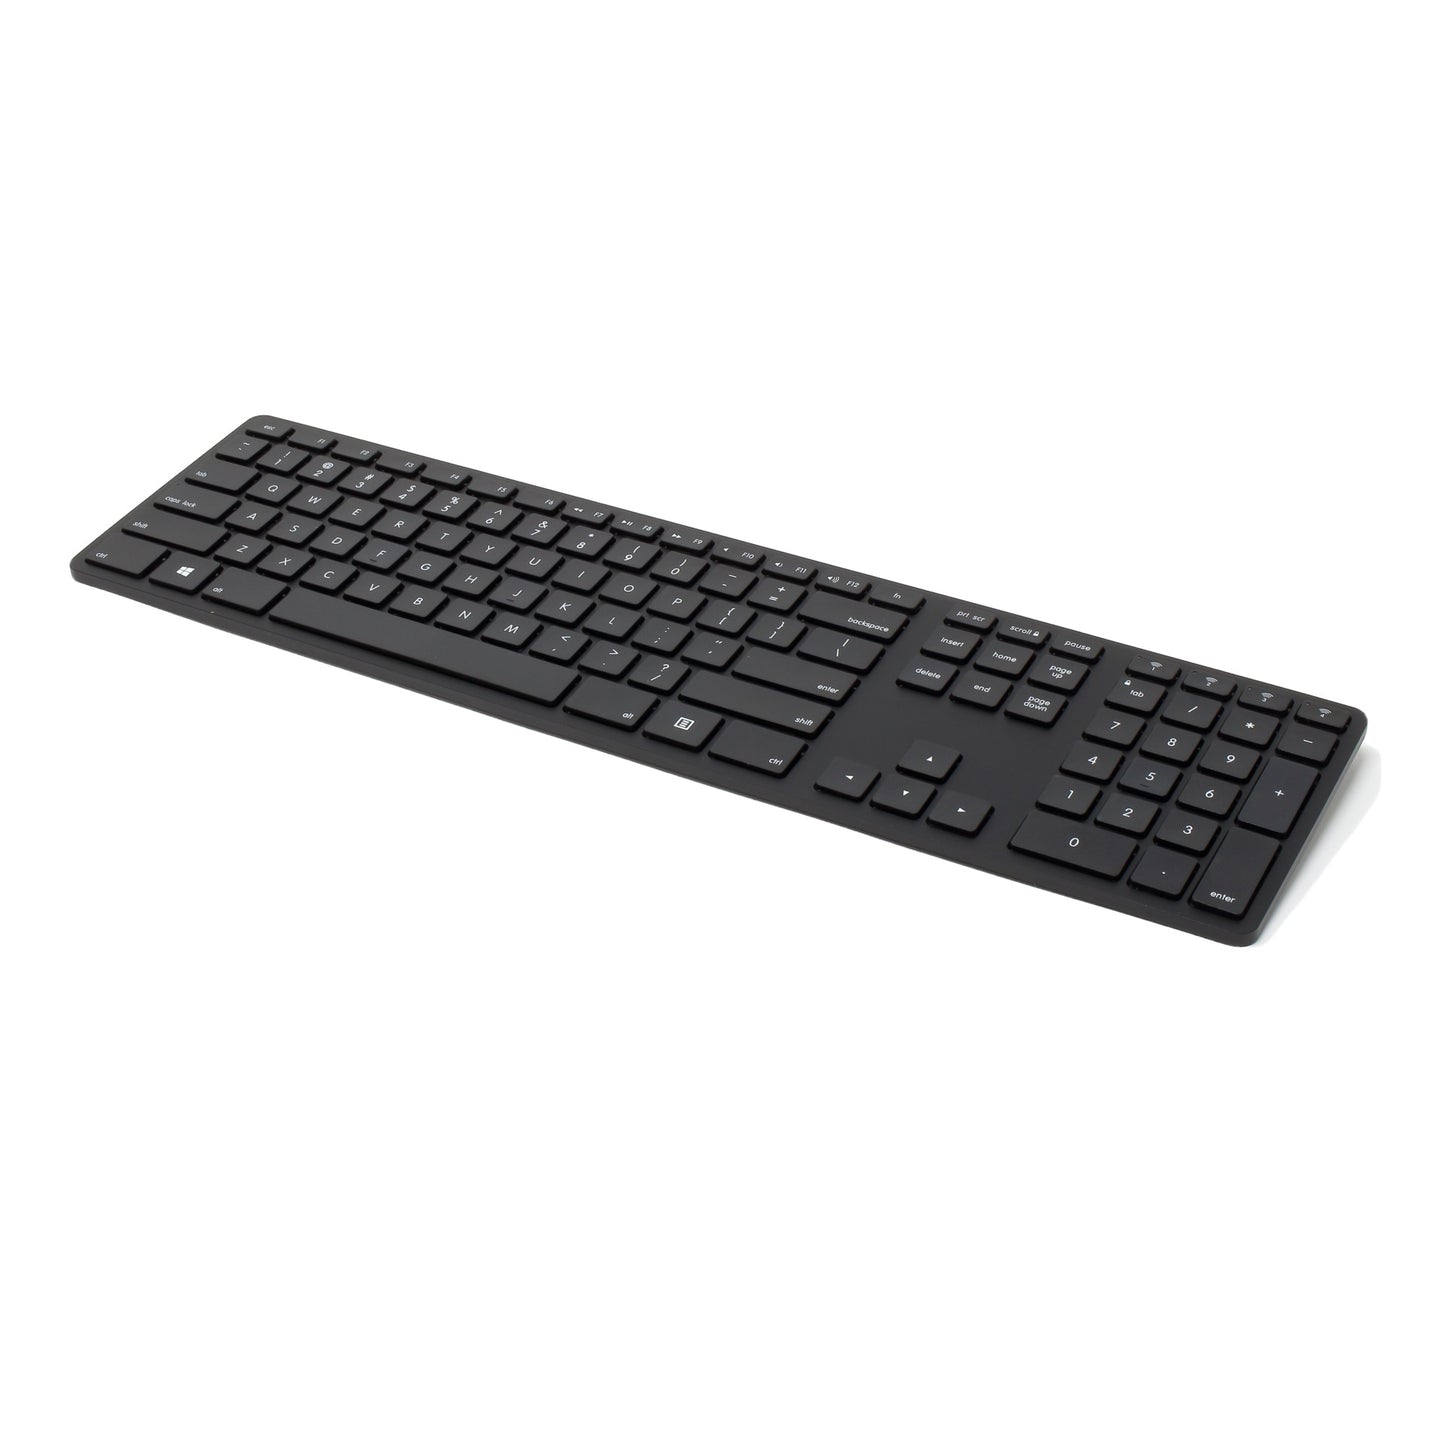 Wireless USB-C Keyboard for PC - Black